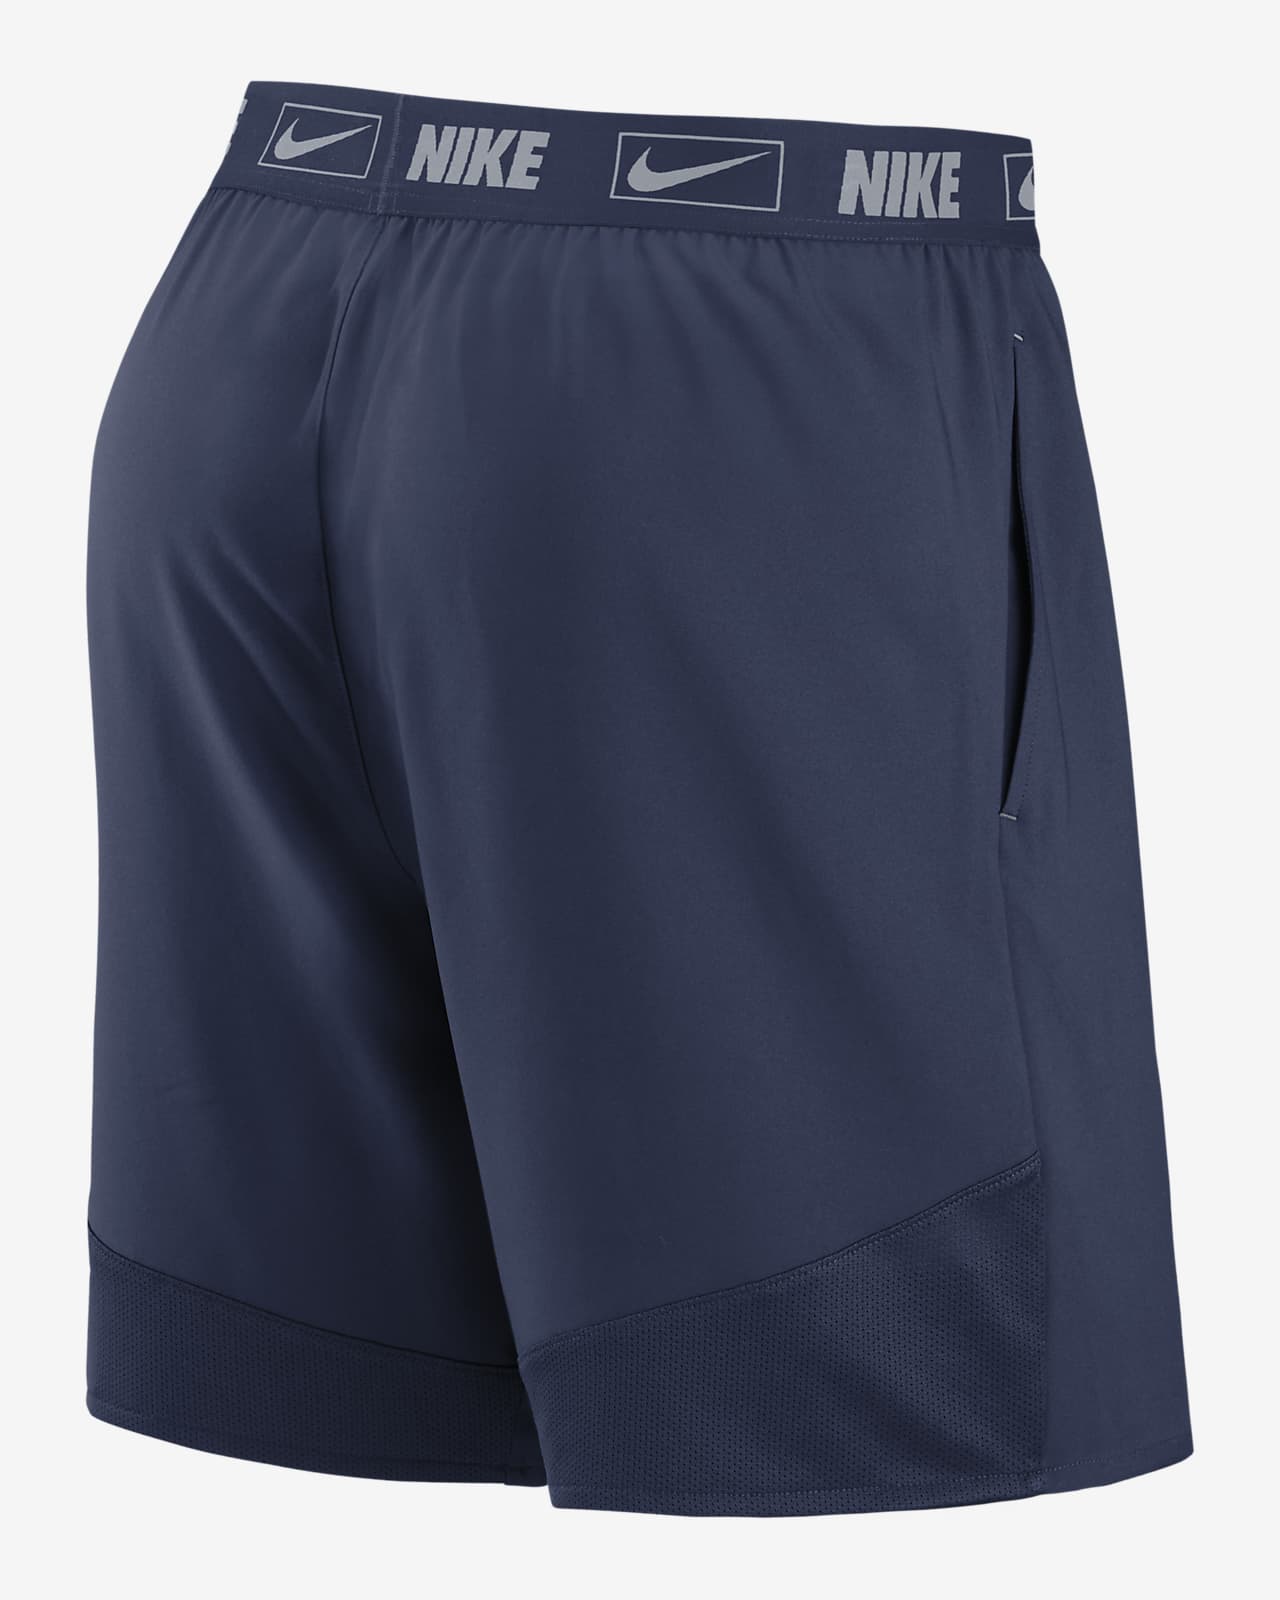 Nike Dri-FIT City Connect Logo (MLB Chicago Cubs) Men's T-Shirt. Nike.com